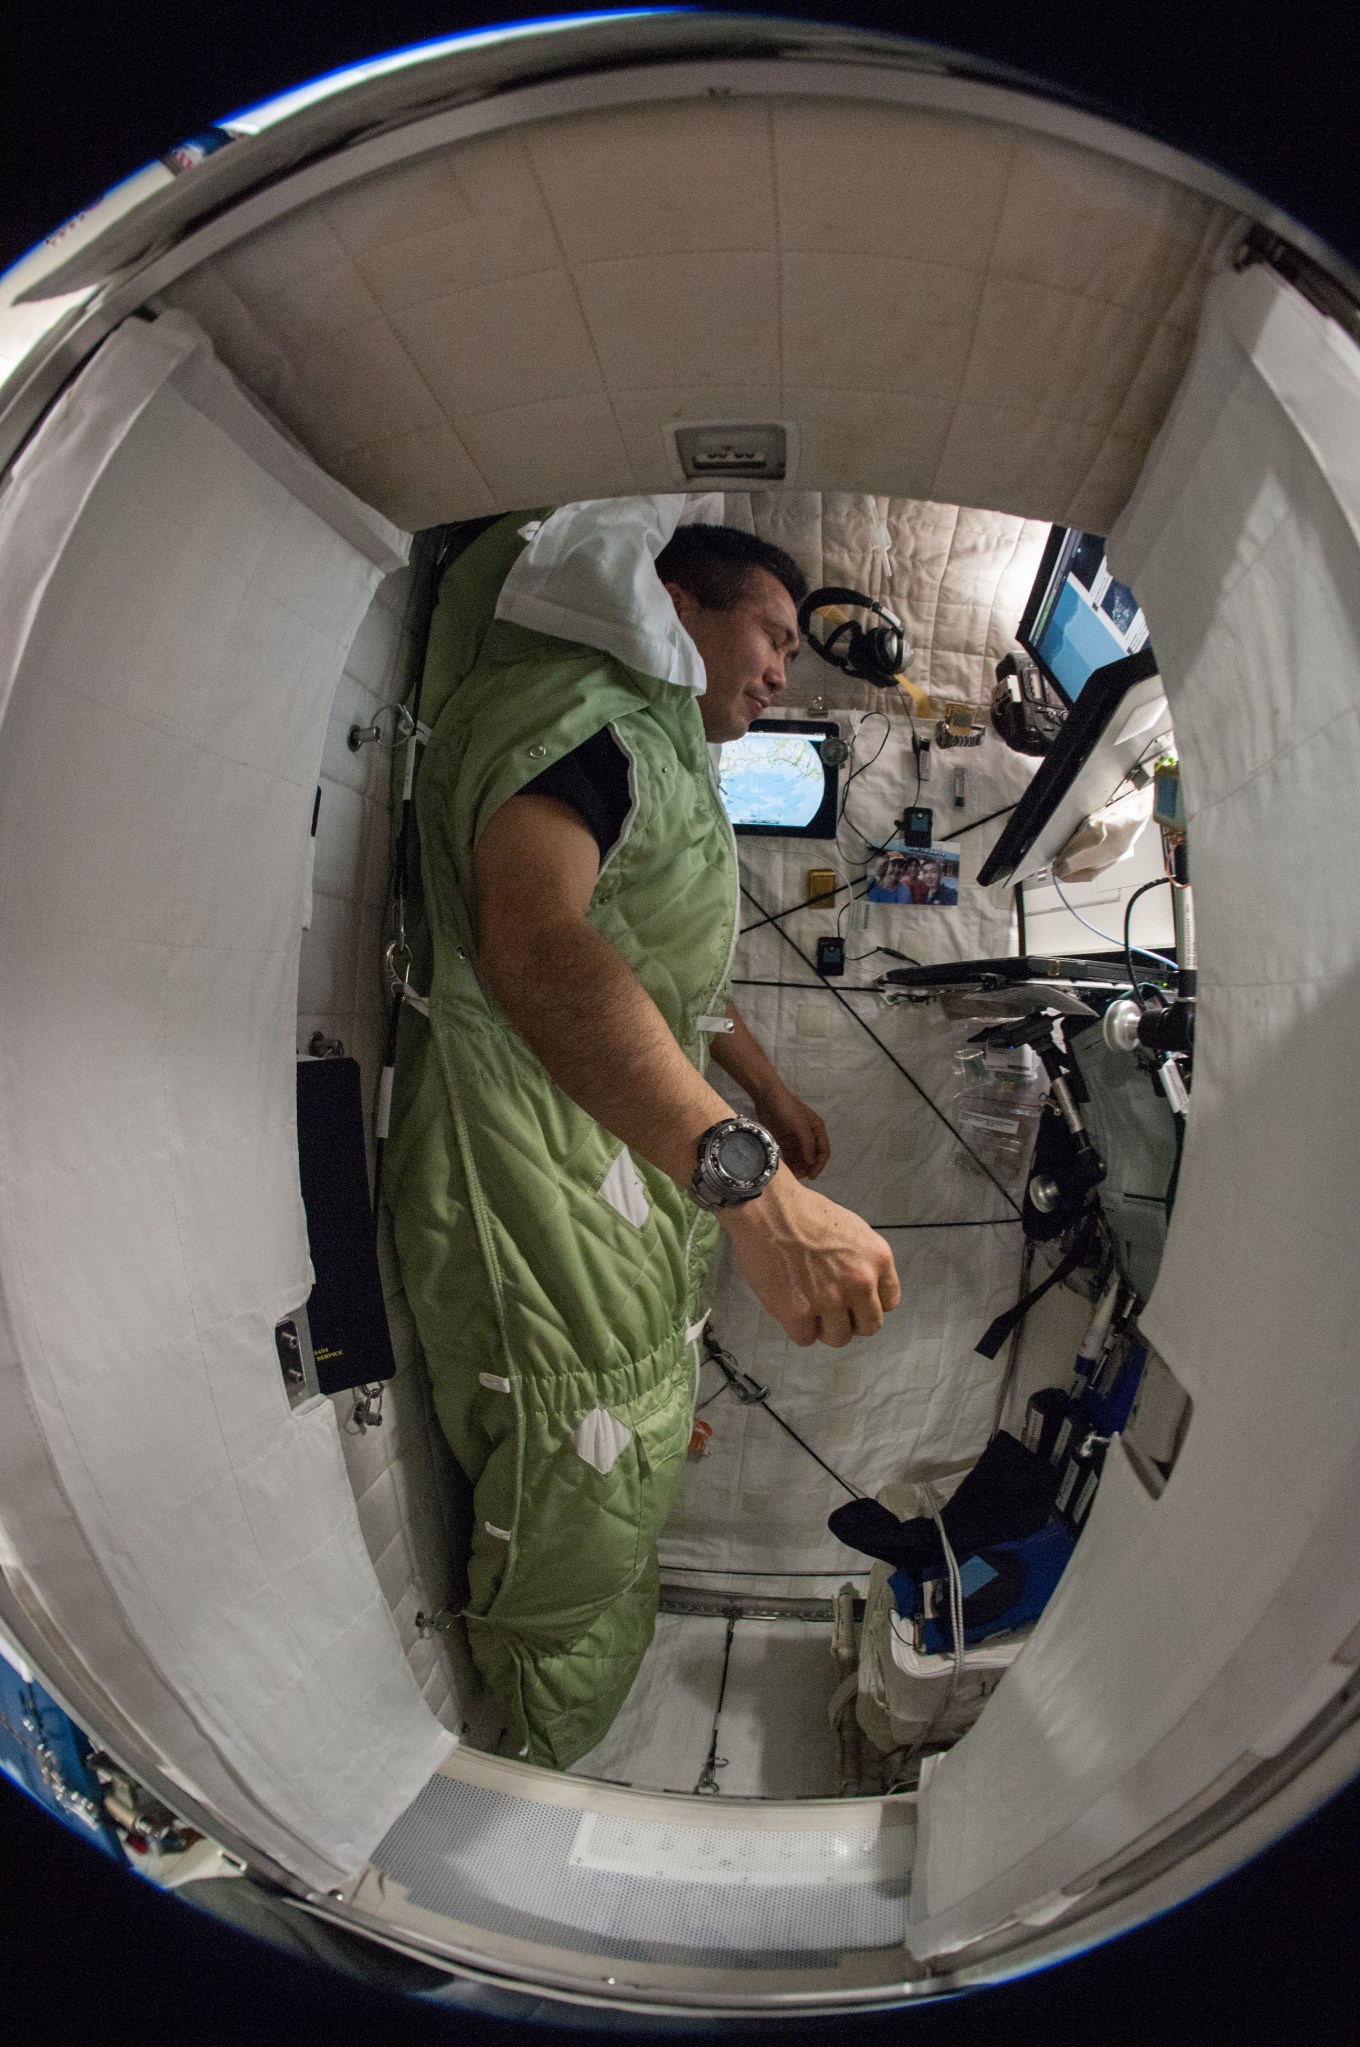 View of Japan Aerospace Exploration Agency (JAXA) Koichi Wakata, Expedition 38 Flight Engineer, strapped into his sleeping bag